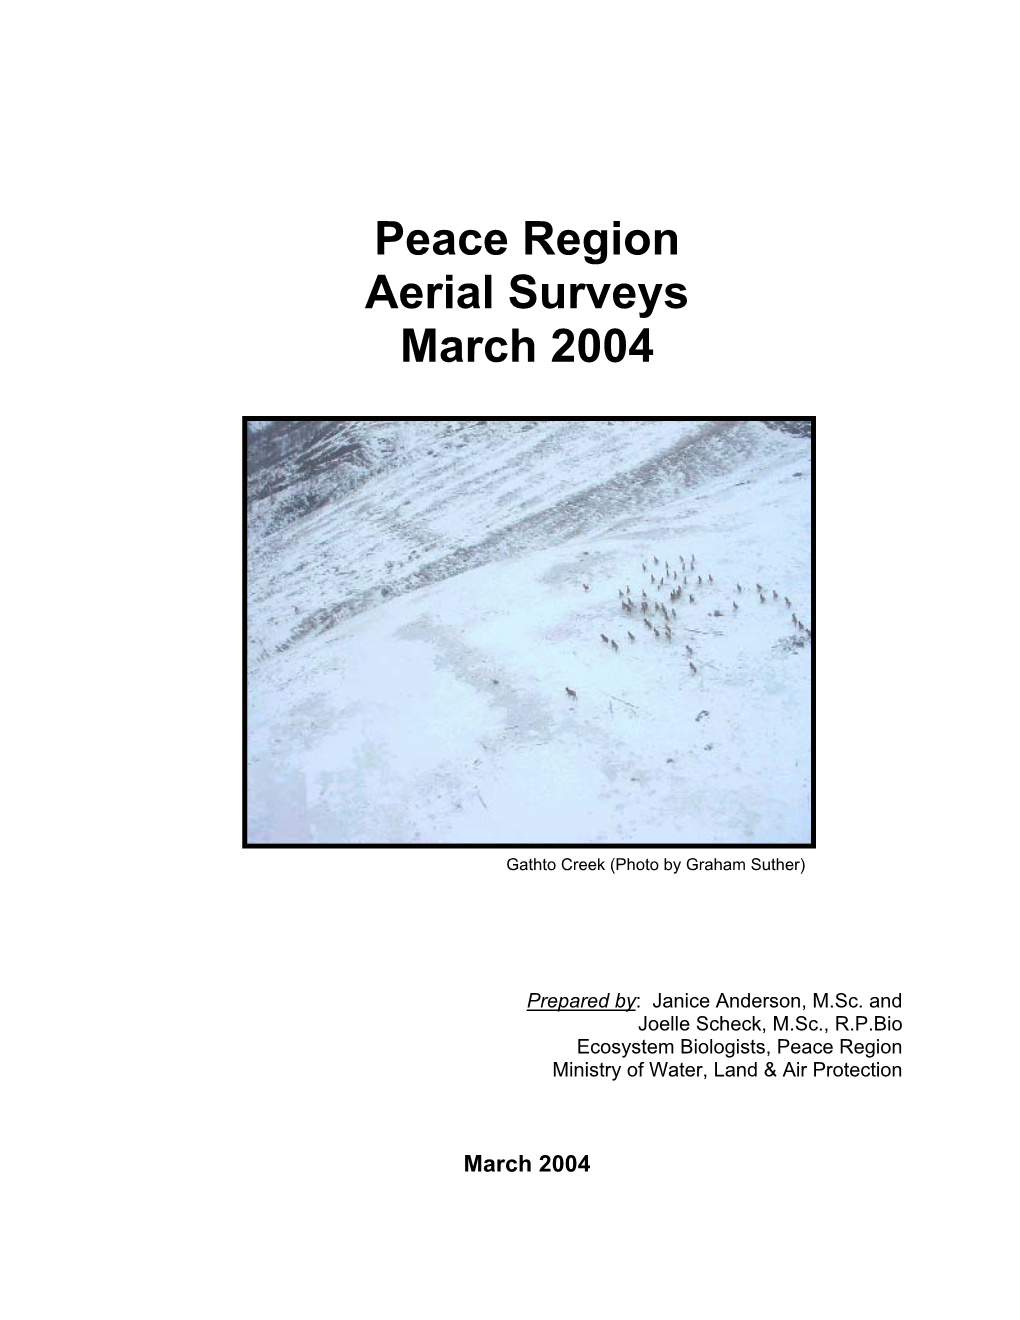 Peace Region Aerial Surveys, March 2004